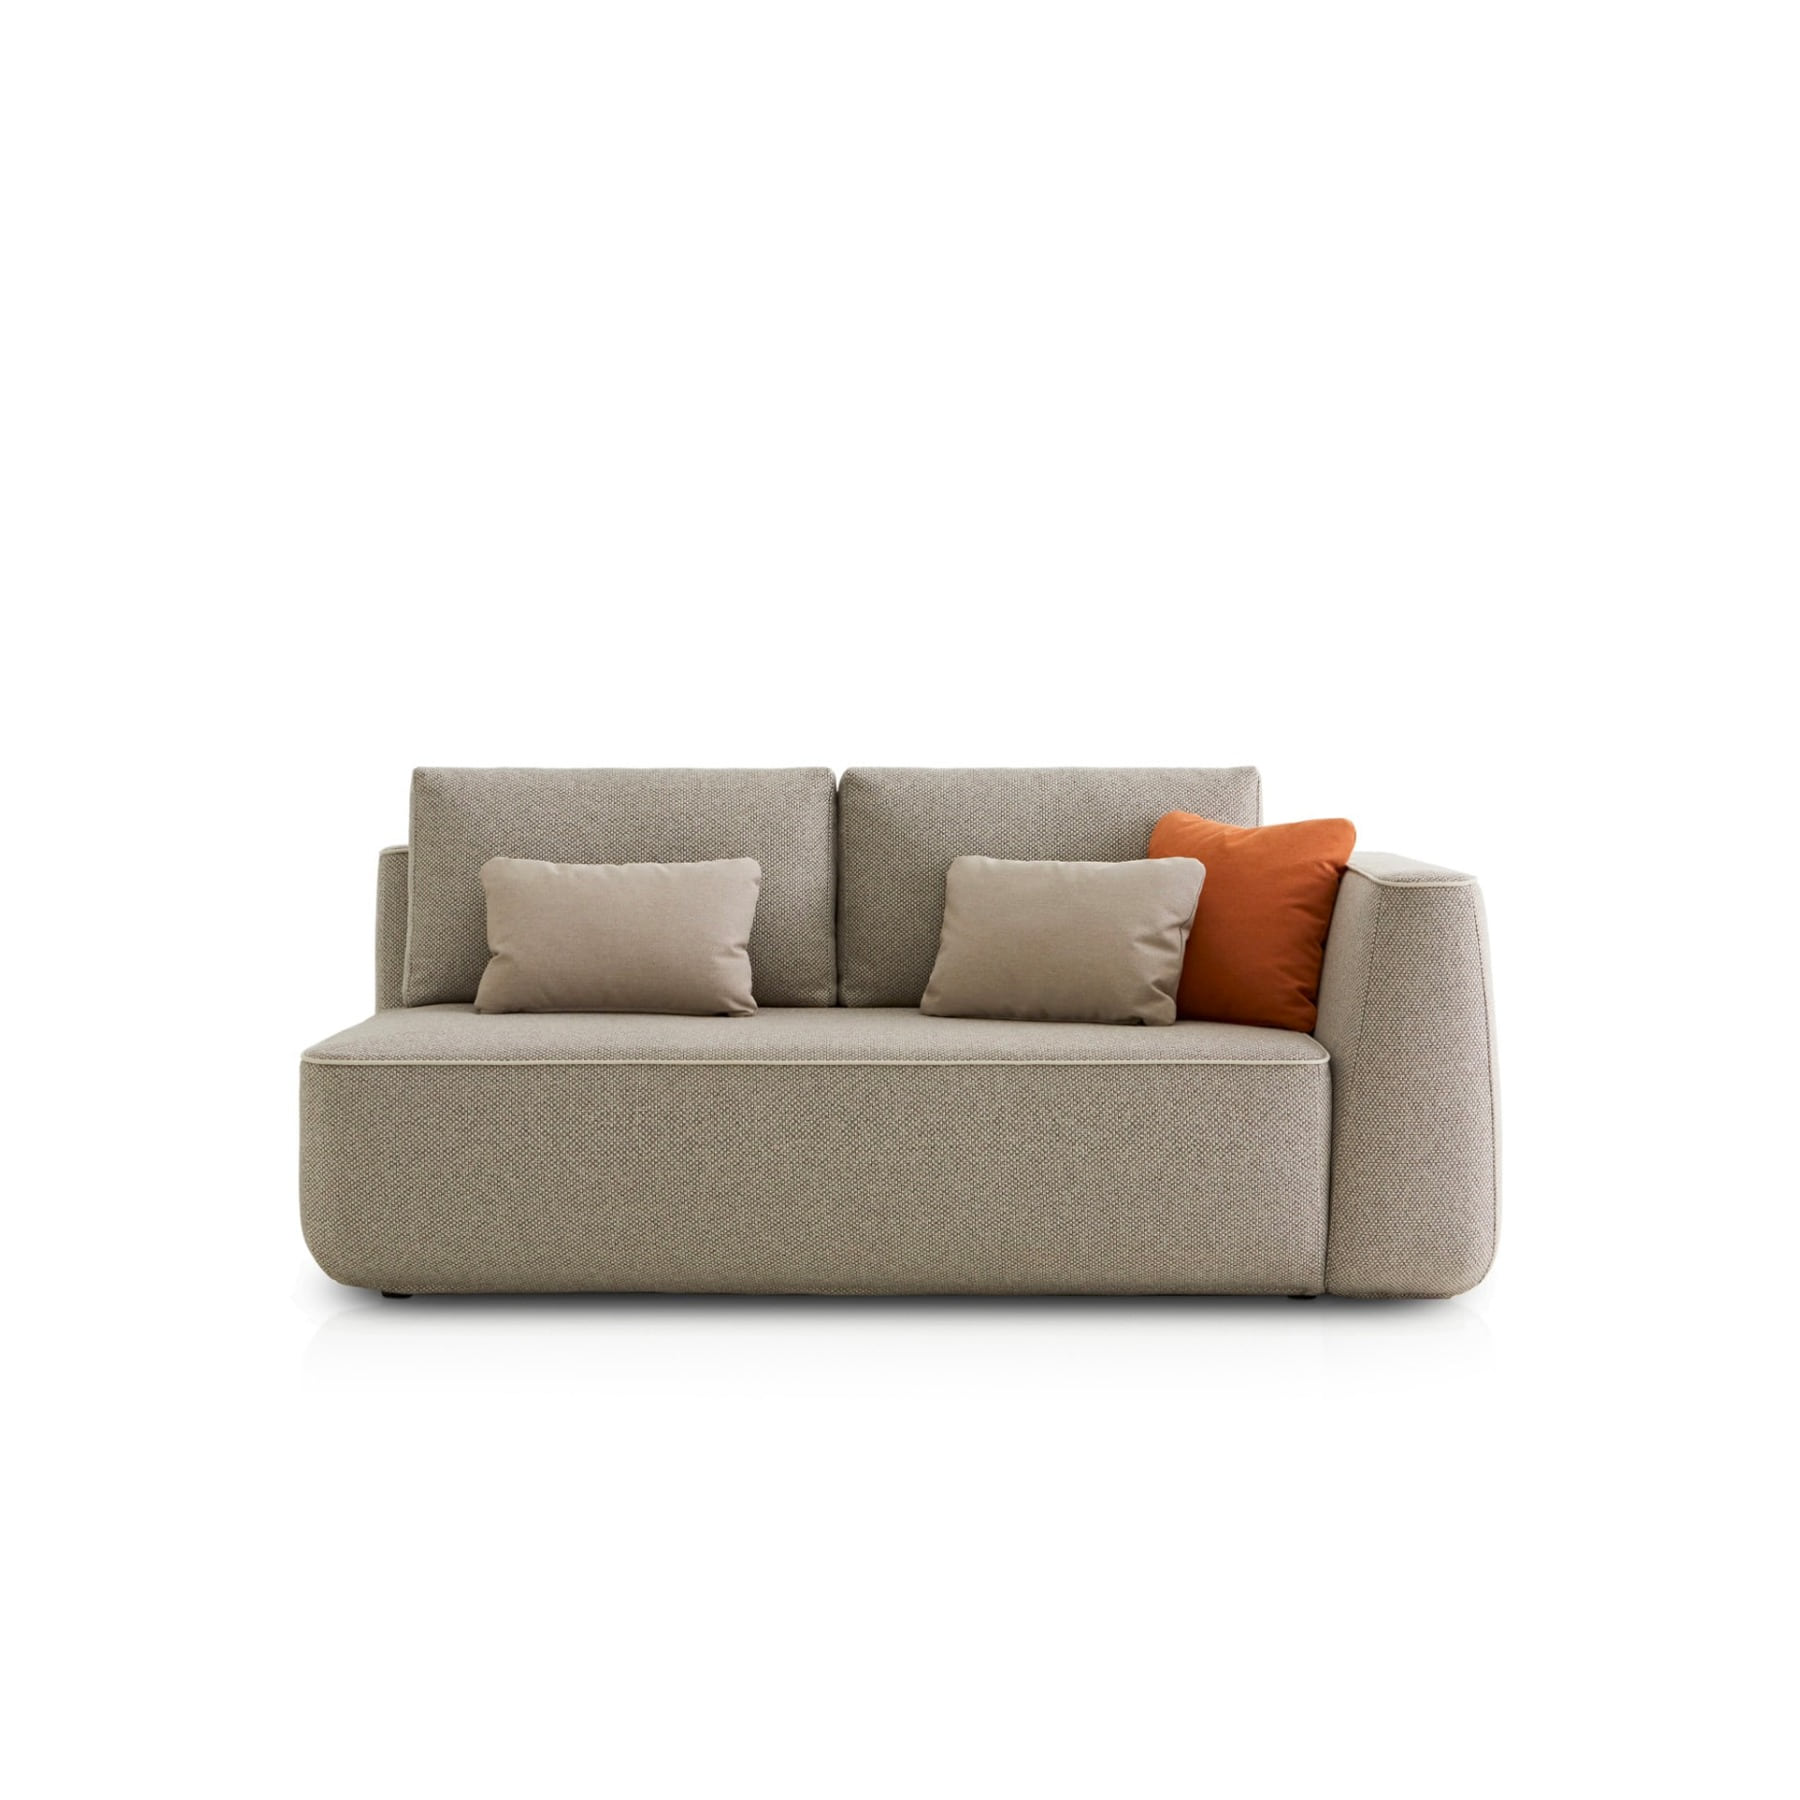 Plump Chaise Lounge Modular Sofa 1